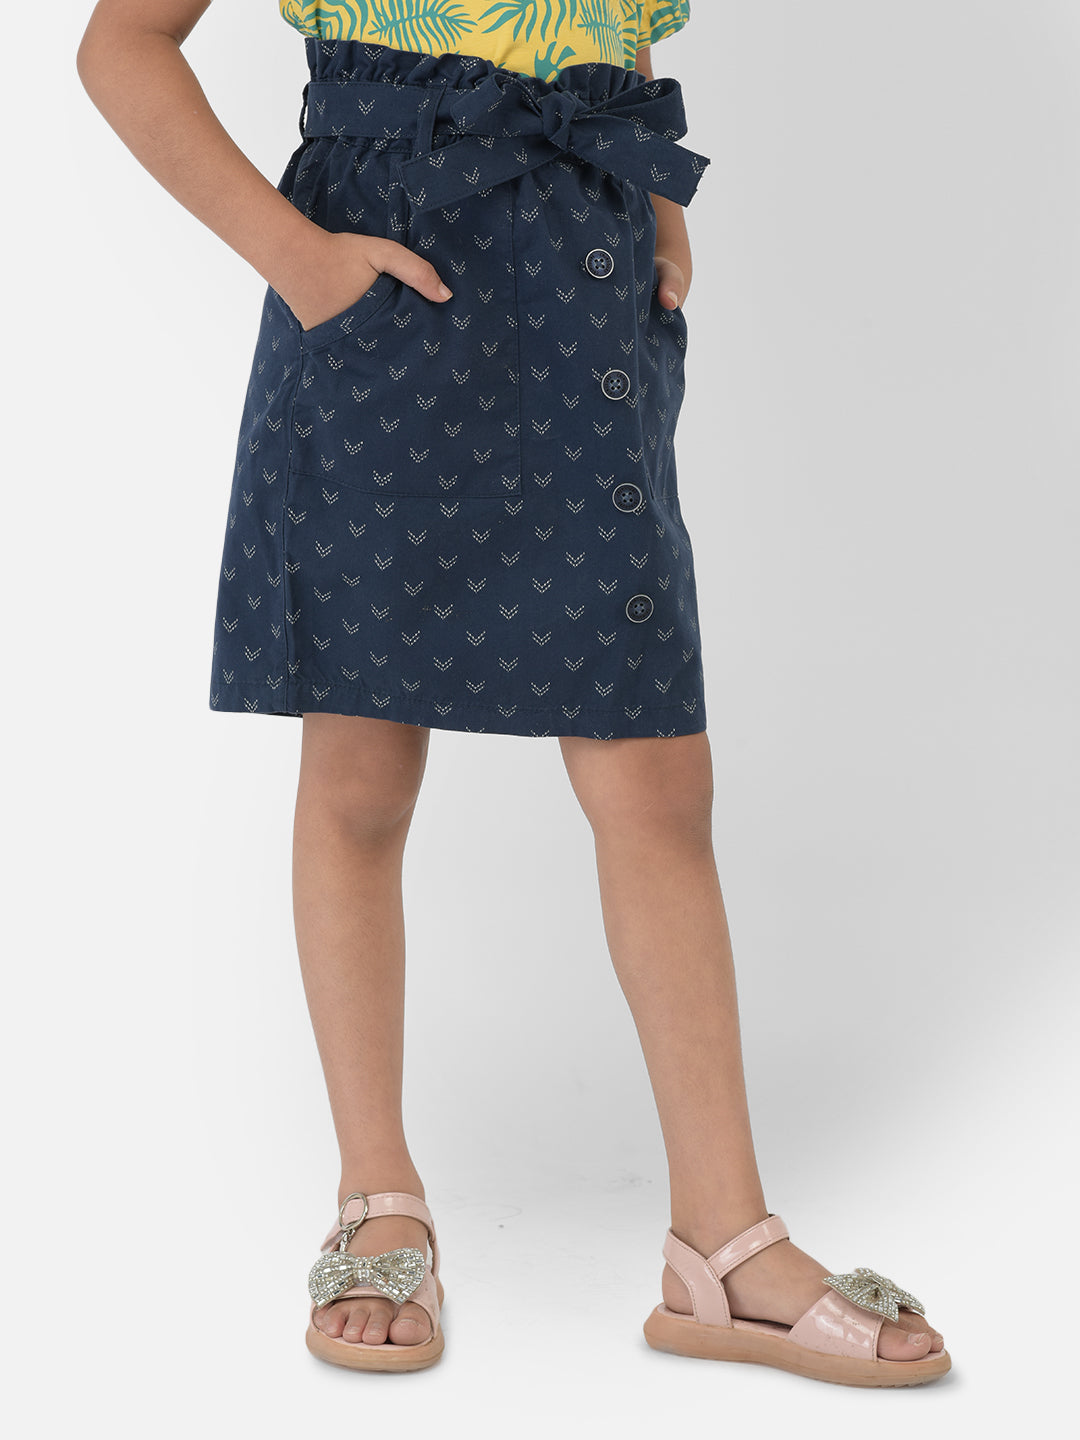 Navy Blue Printed Skirt With Belt - Girls Skirts